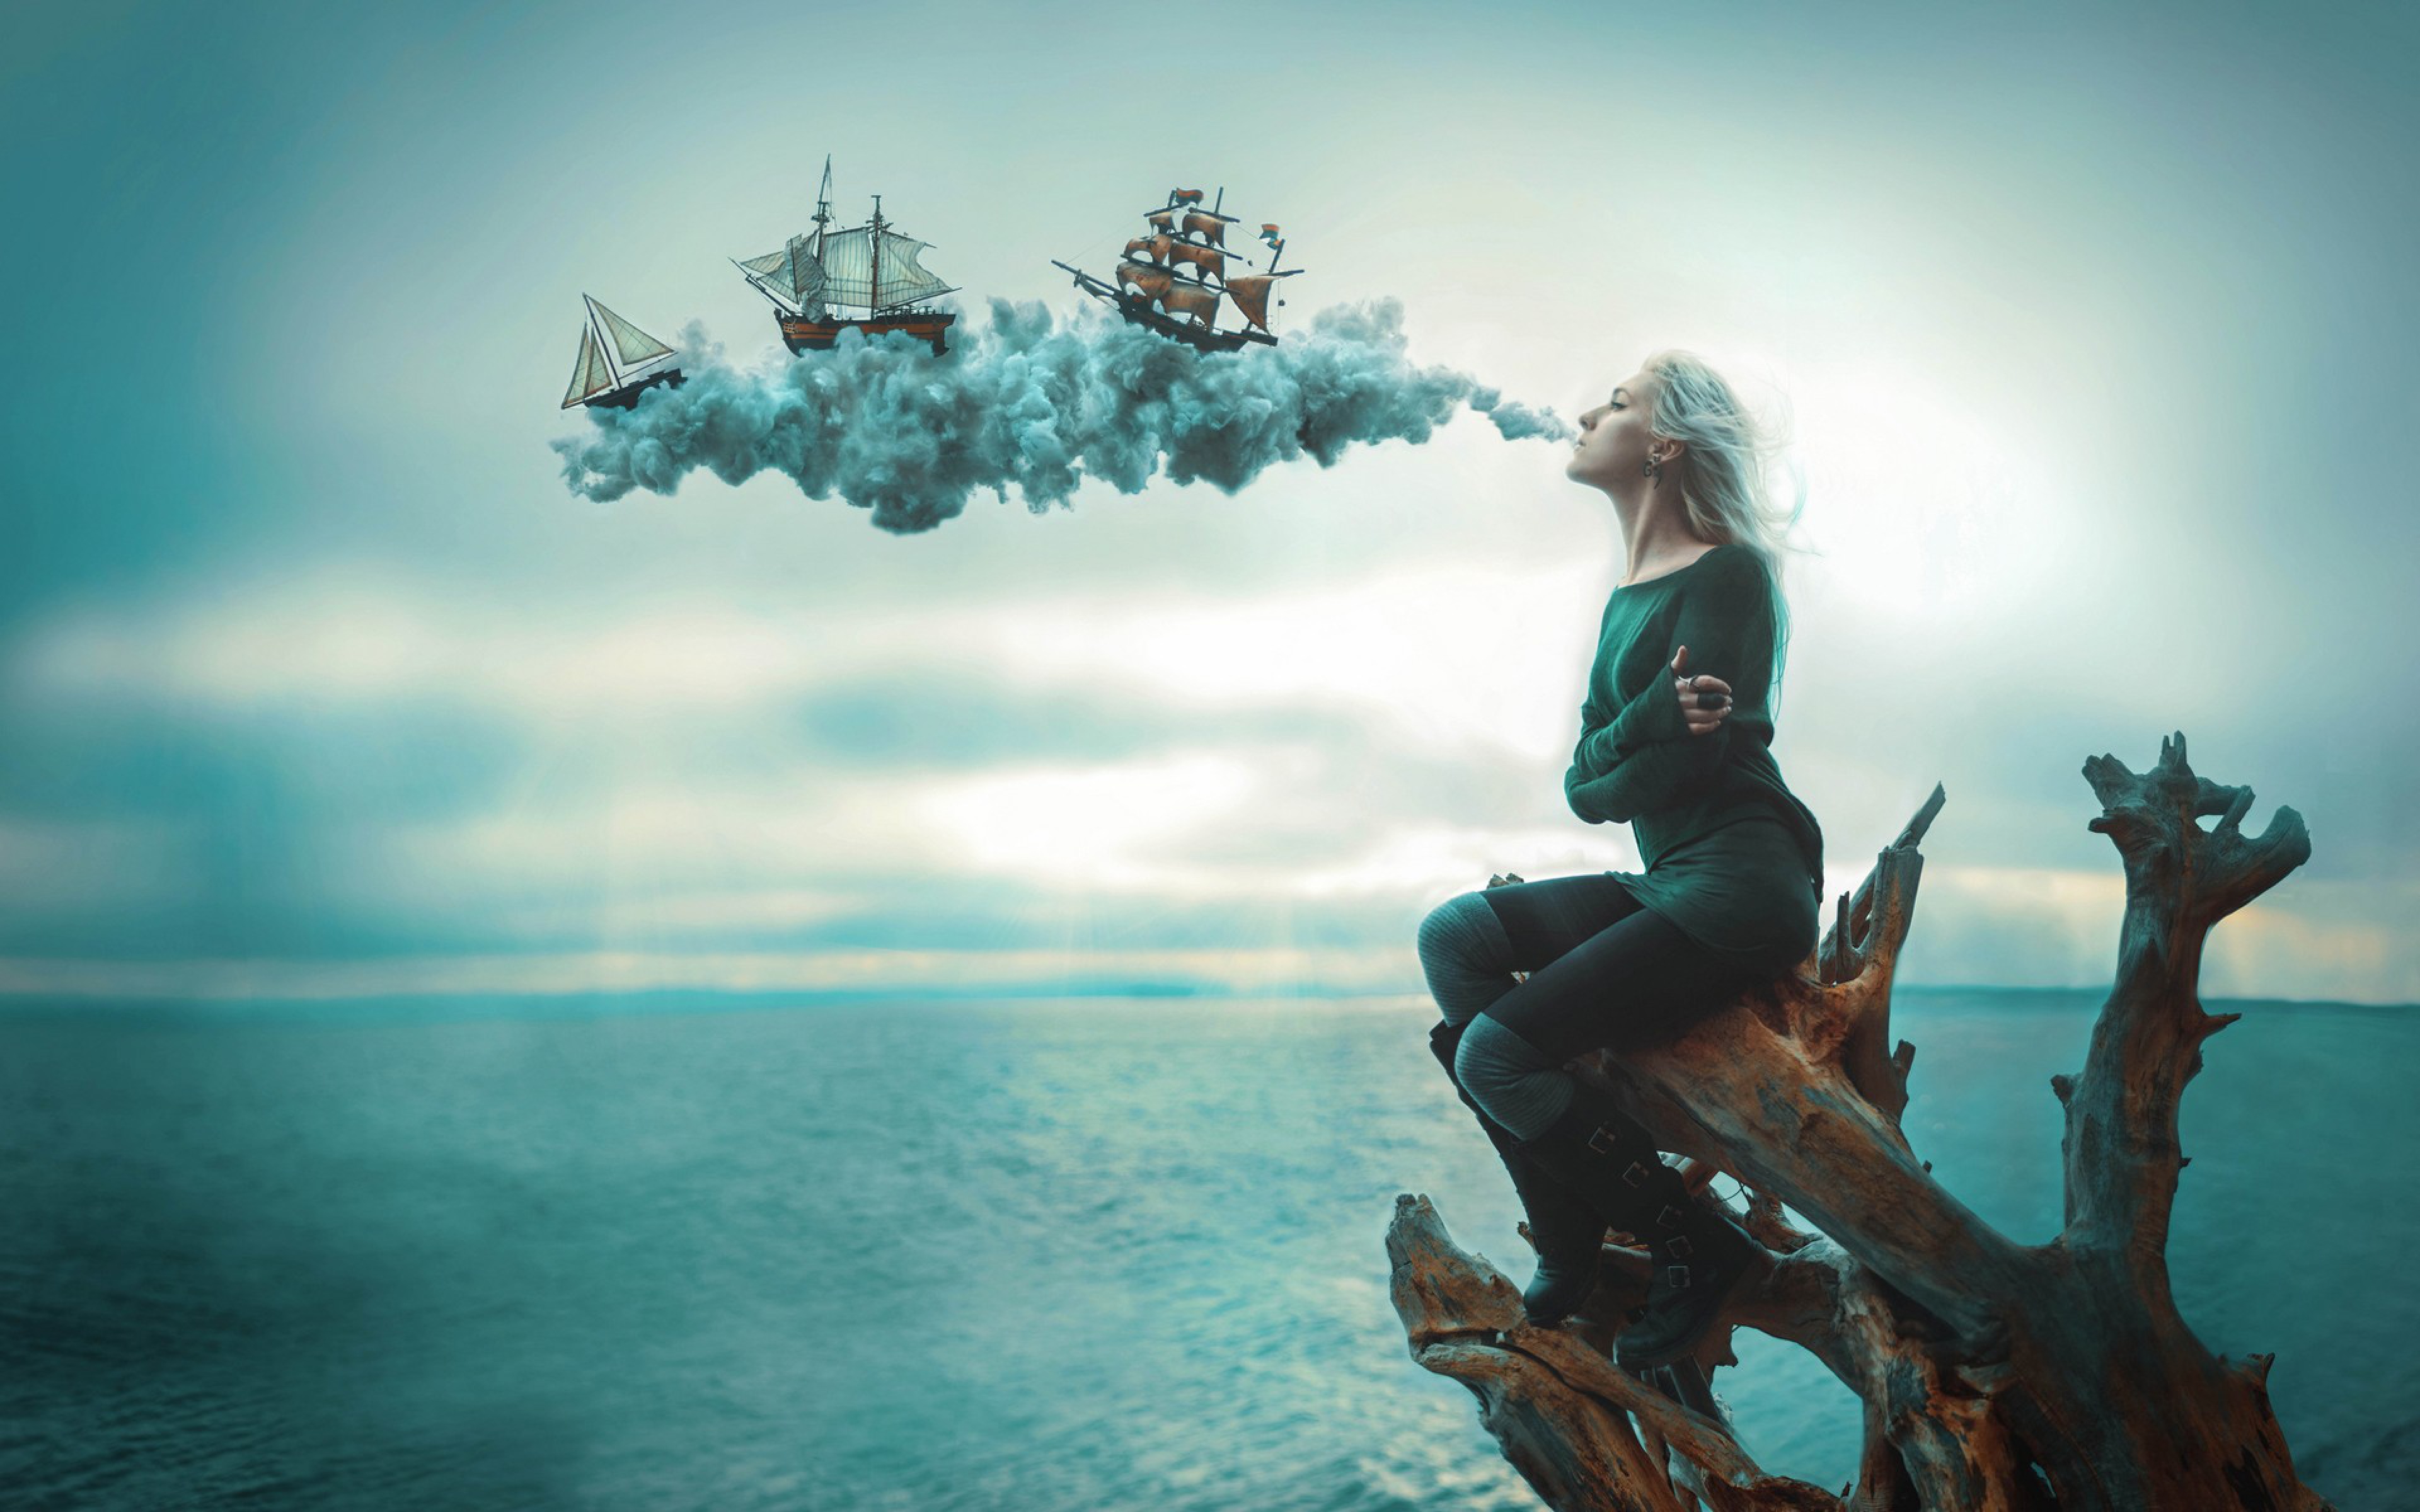 Мысли шторм. Девушка на корабле. Девушка-море. Фотосессия в стиле фантастика. Фантастическое море.